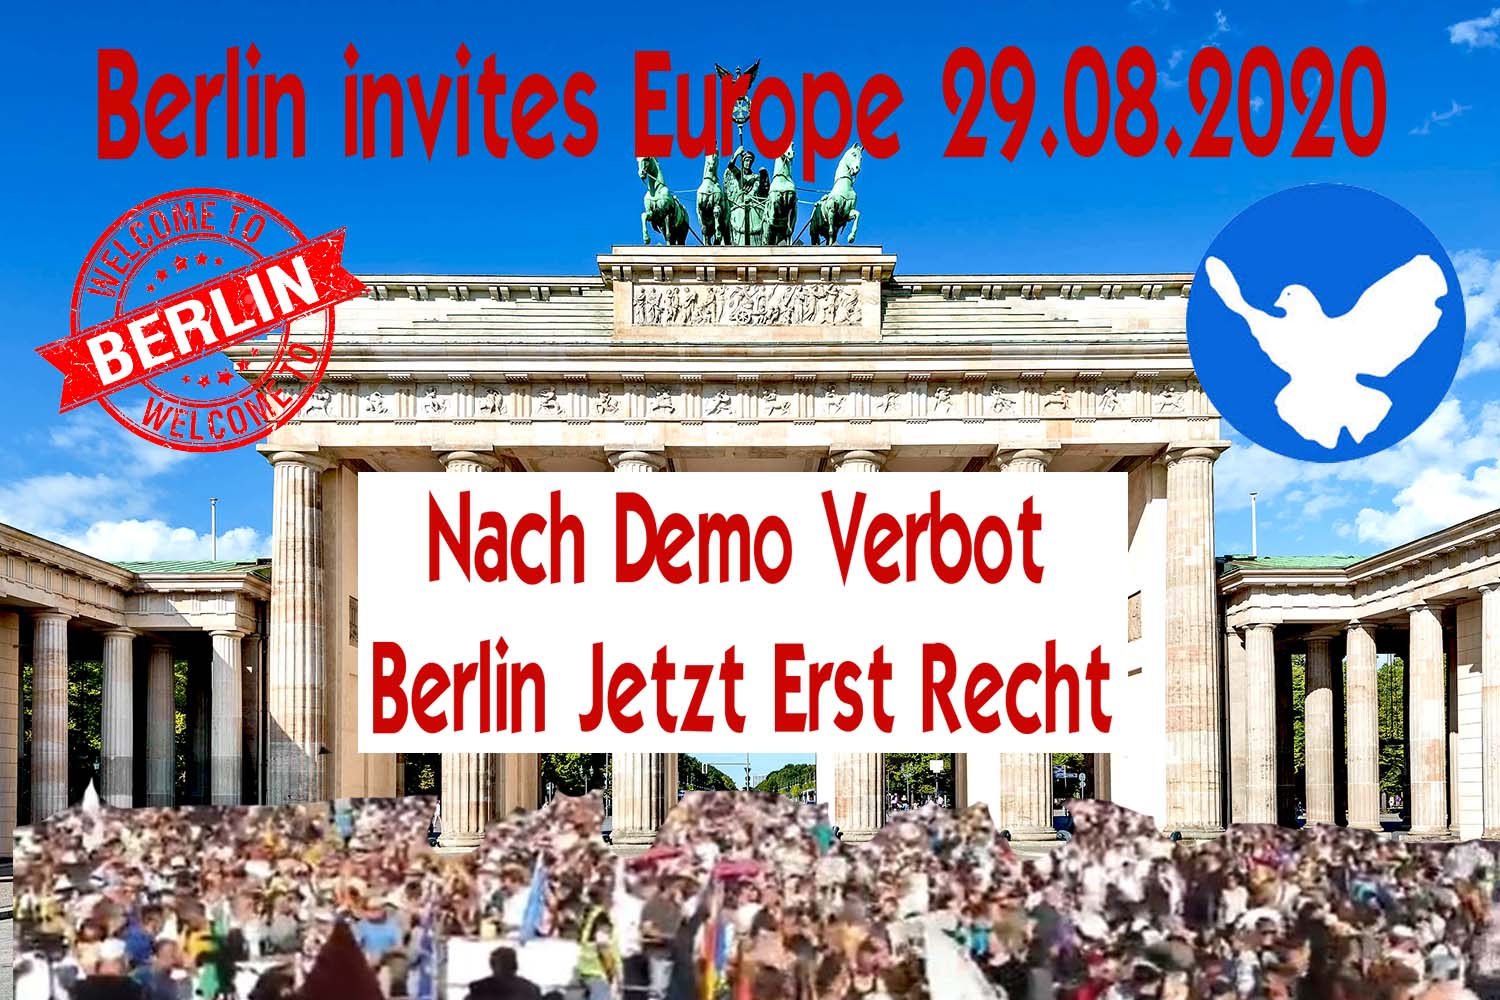 Berlin invites Europe 29.08.2020